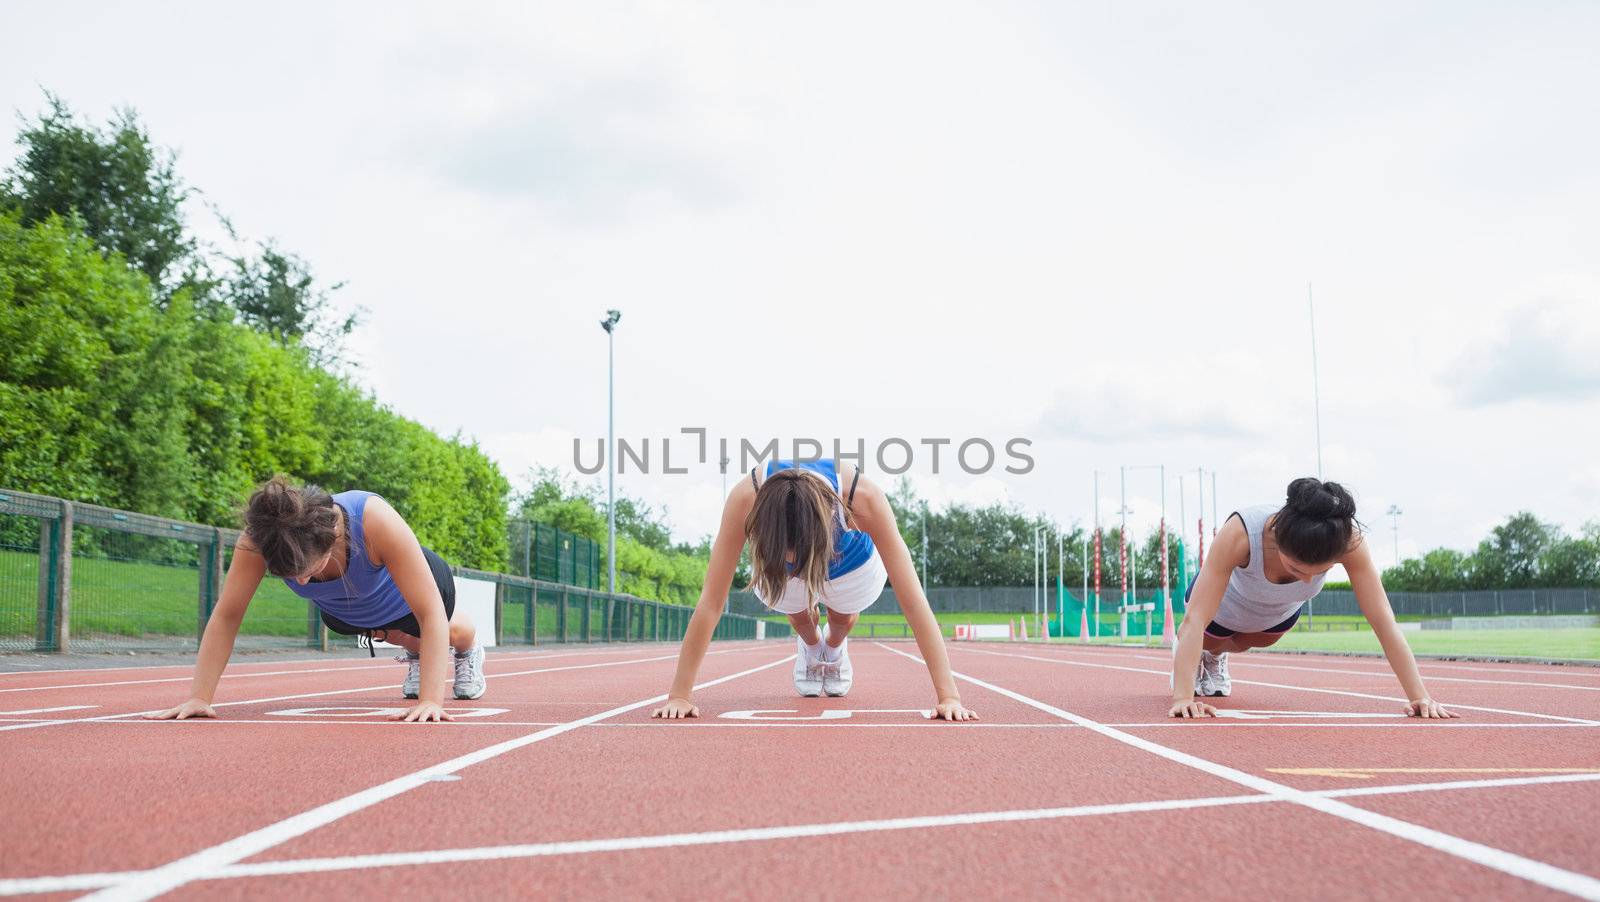 Three woman stretching on running track in stadium